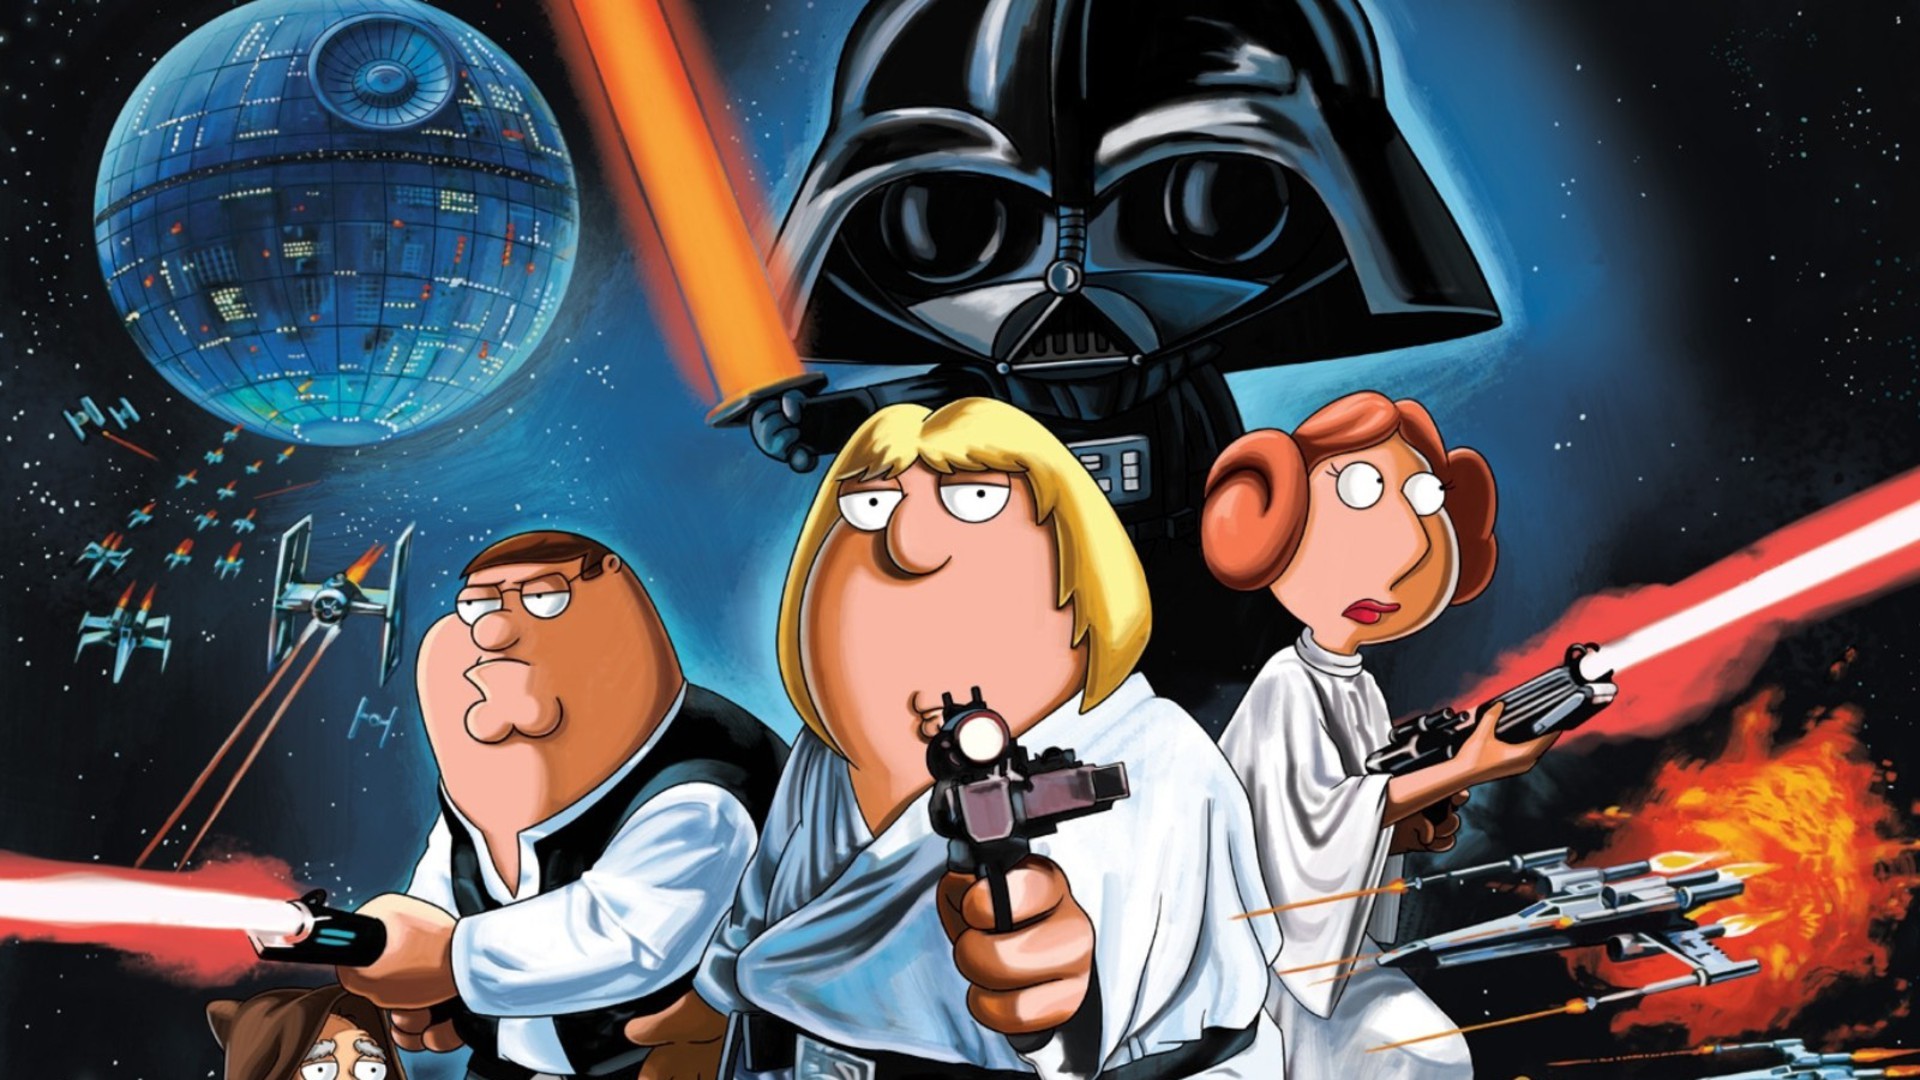 General 1920x1080 humor Star Wars Family Guy Death Star Darth Vader cartoon TV series science fiction